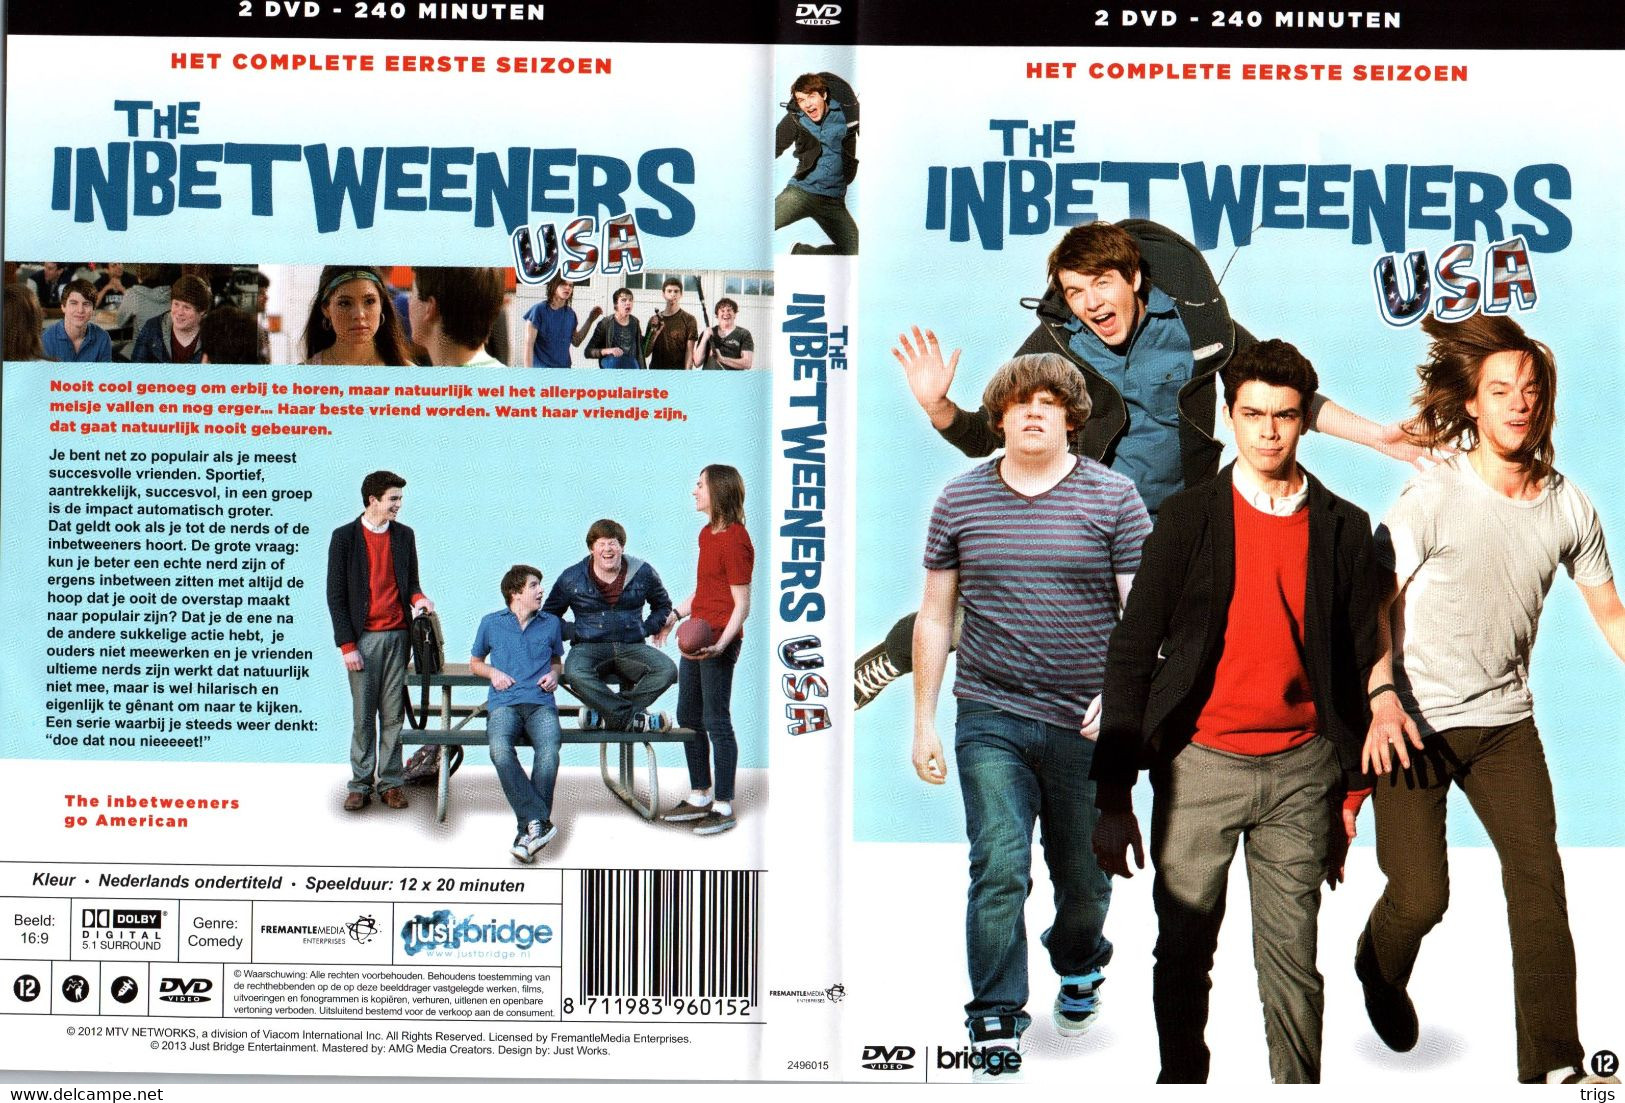 DVD - The Inbetweeners USA: Seizoen 1 (2 DISCS) - TV Shows & Series